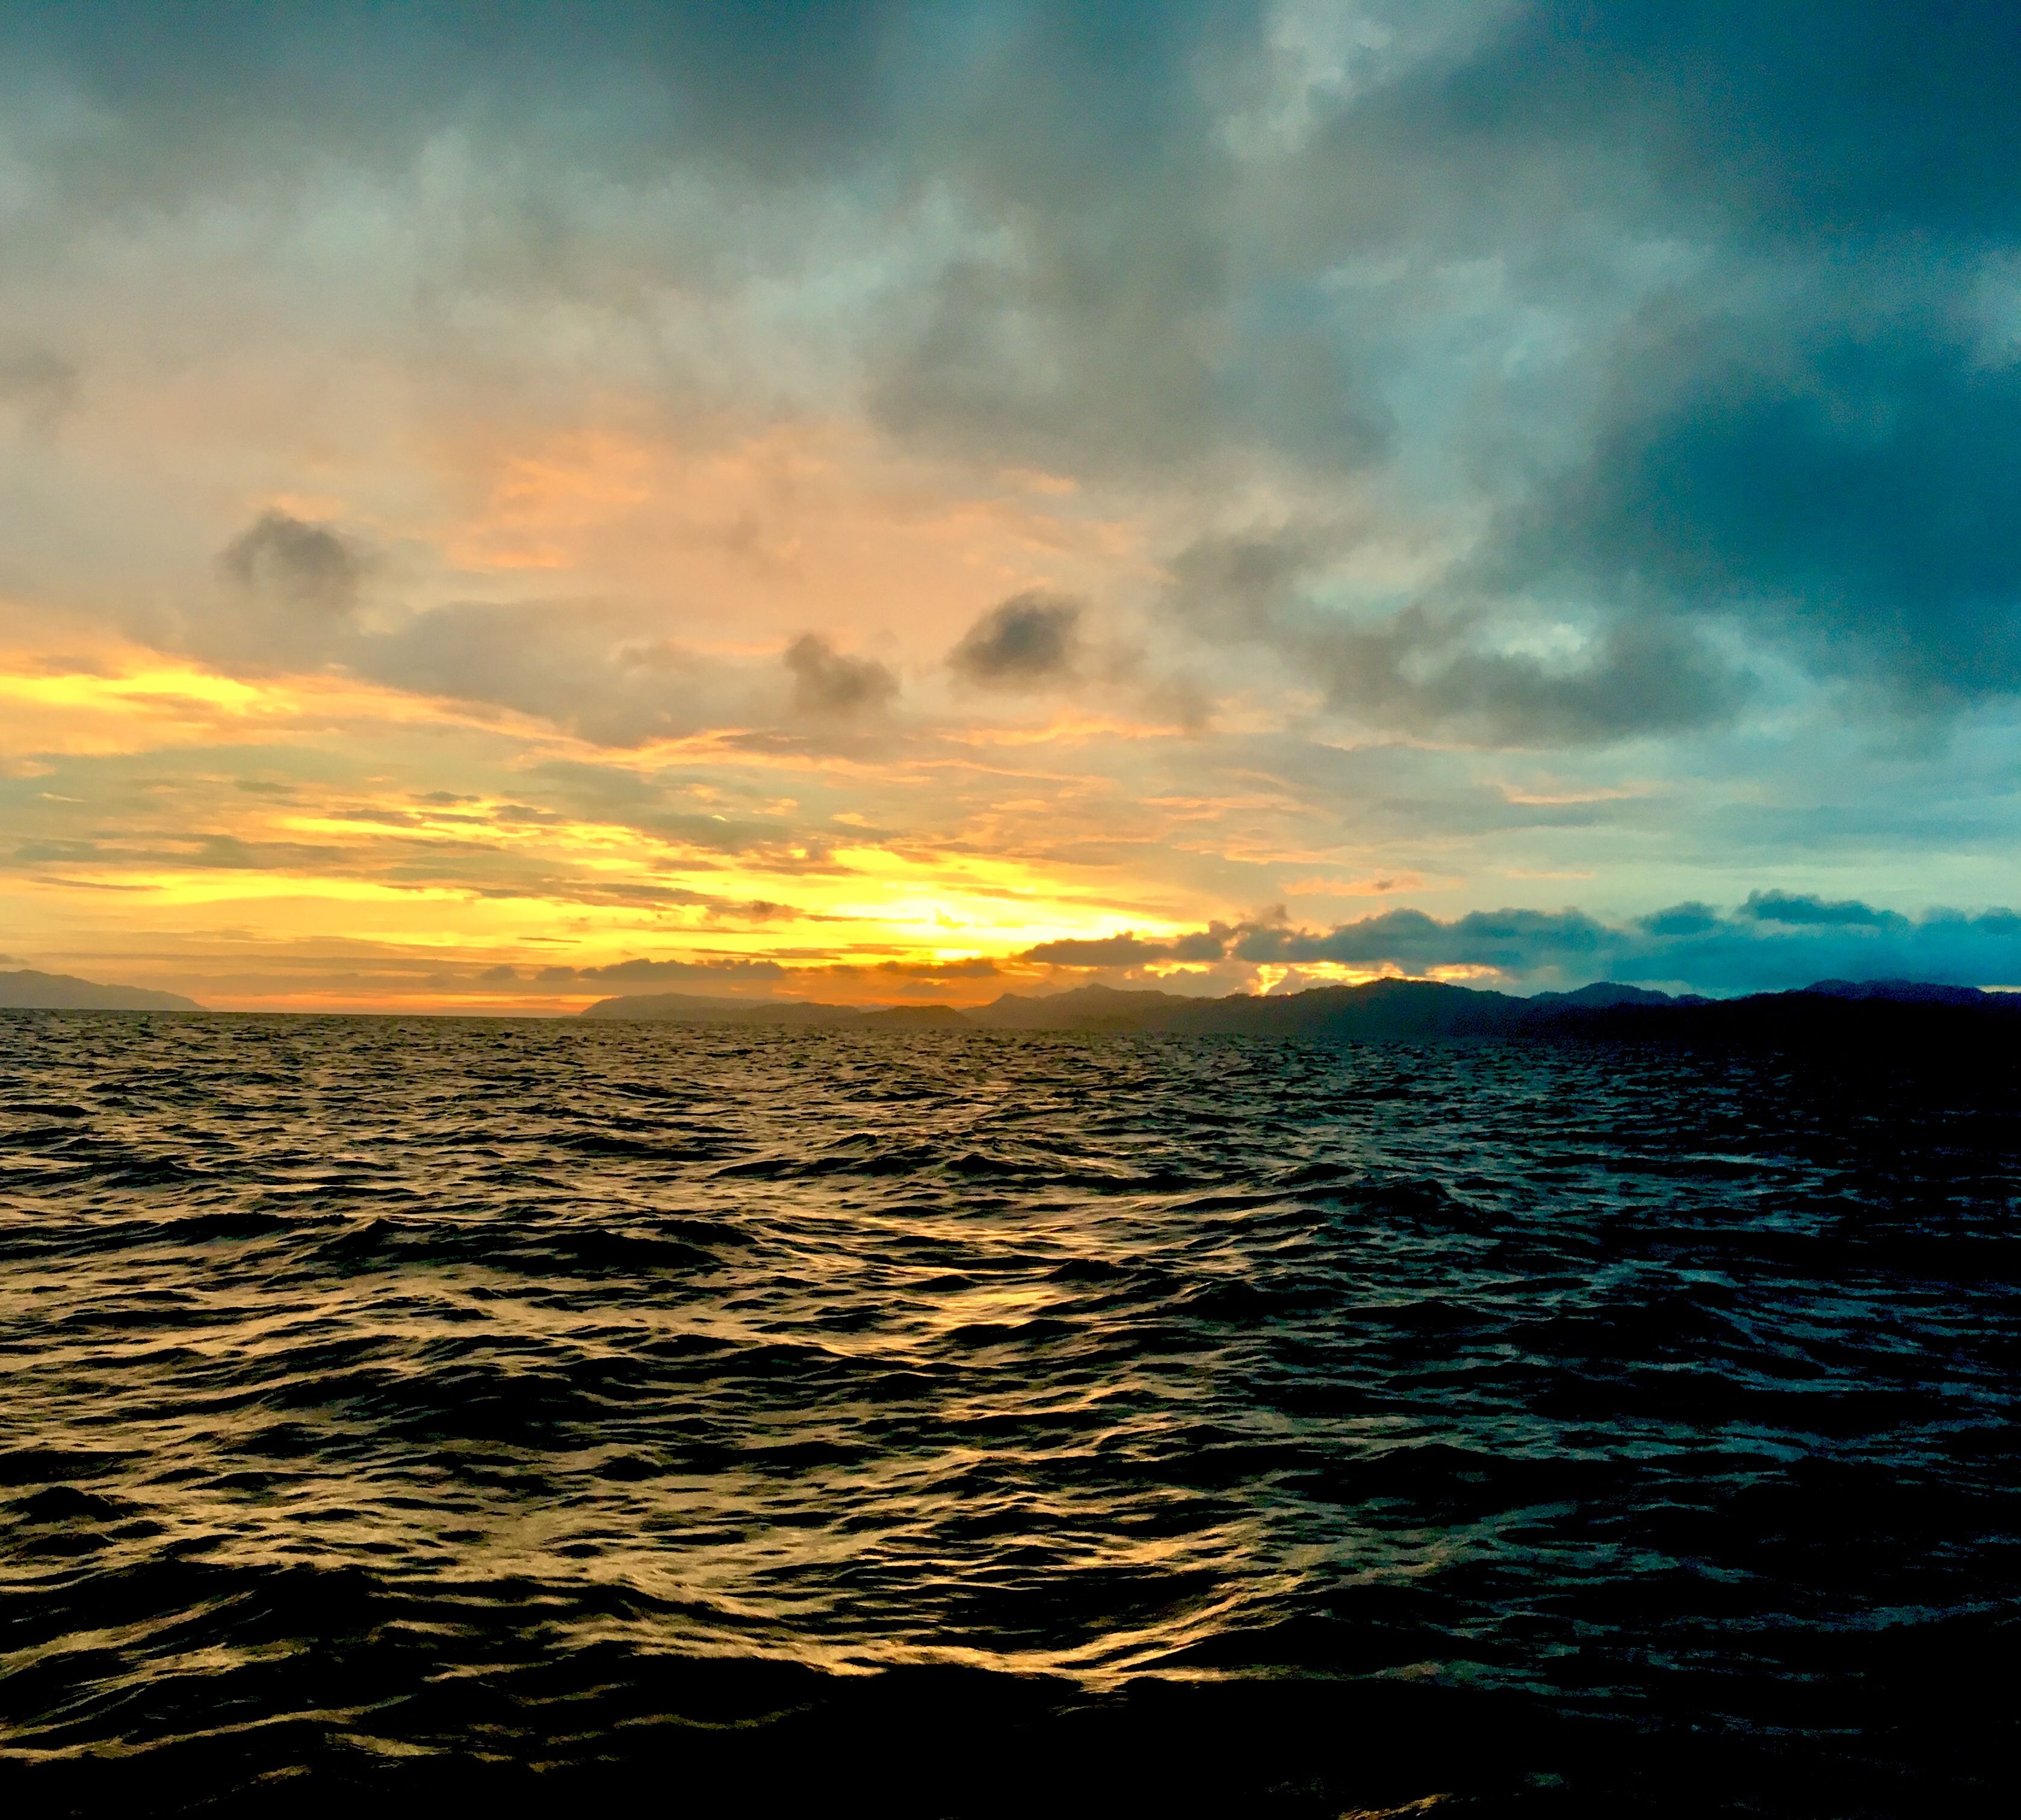 Sunset Raja Ampat Islands. By’ Lera76